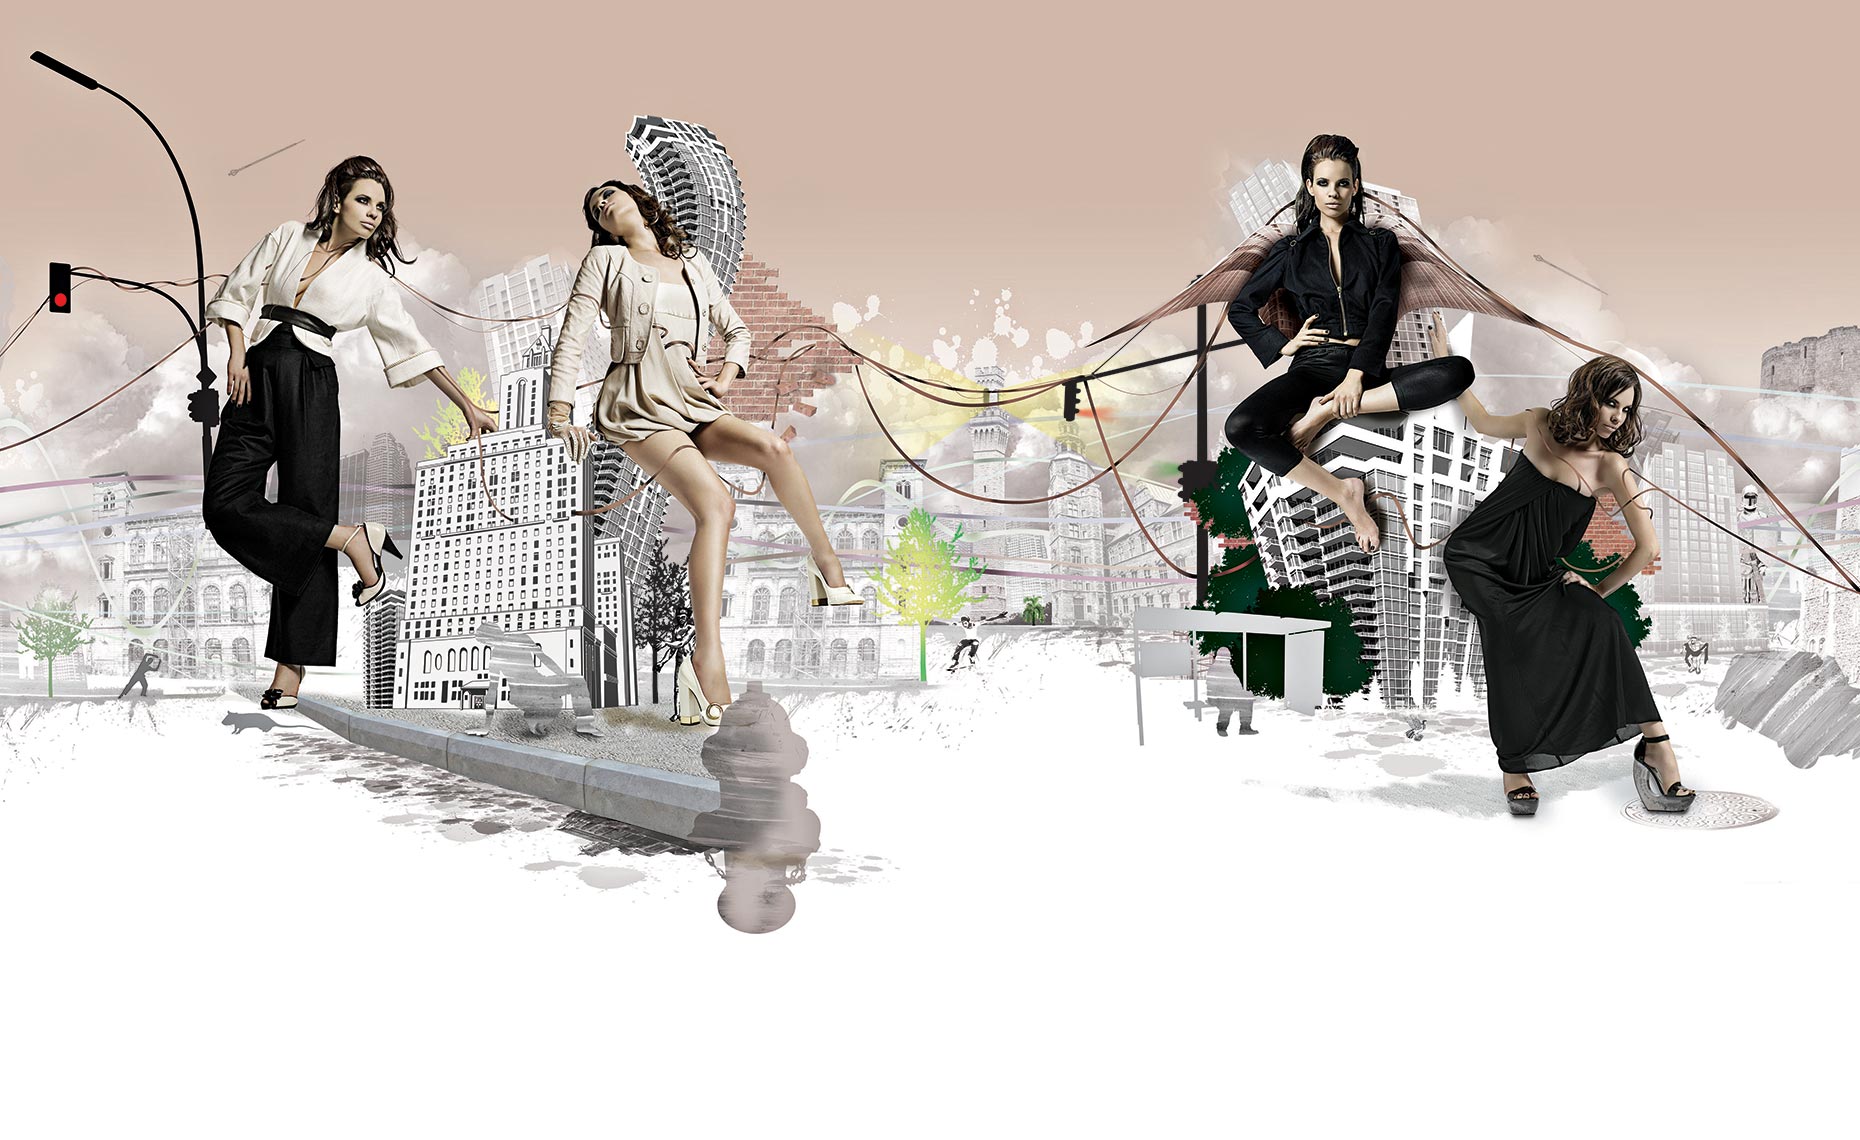 jameslightbown_london_fashion_advertising_photographer_city_illustration_02